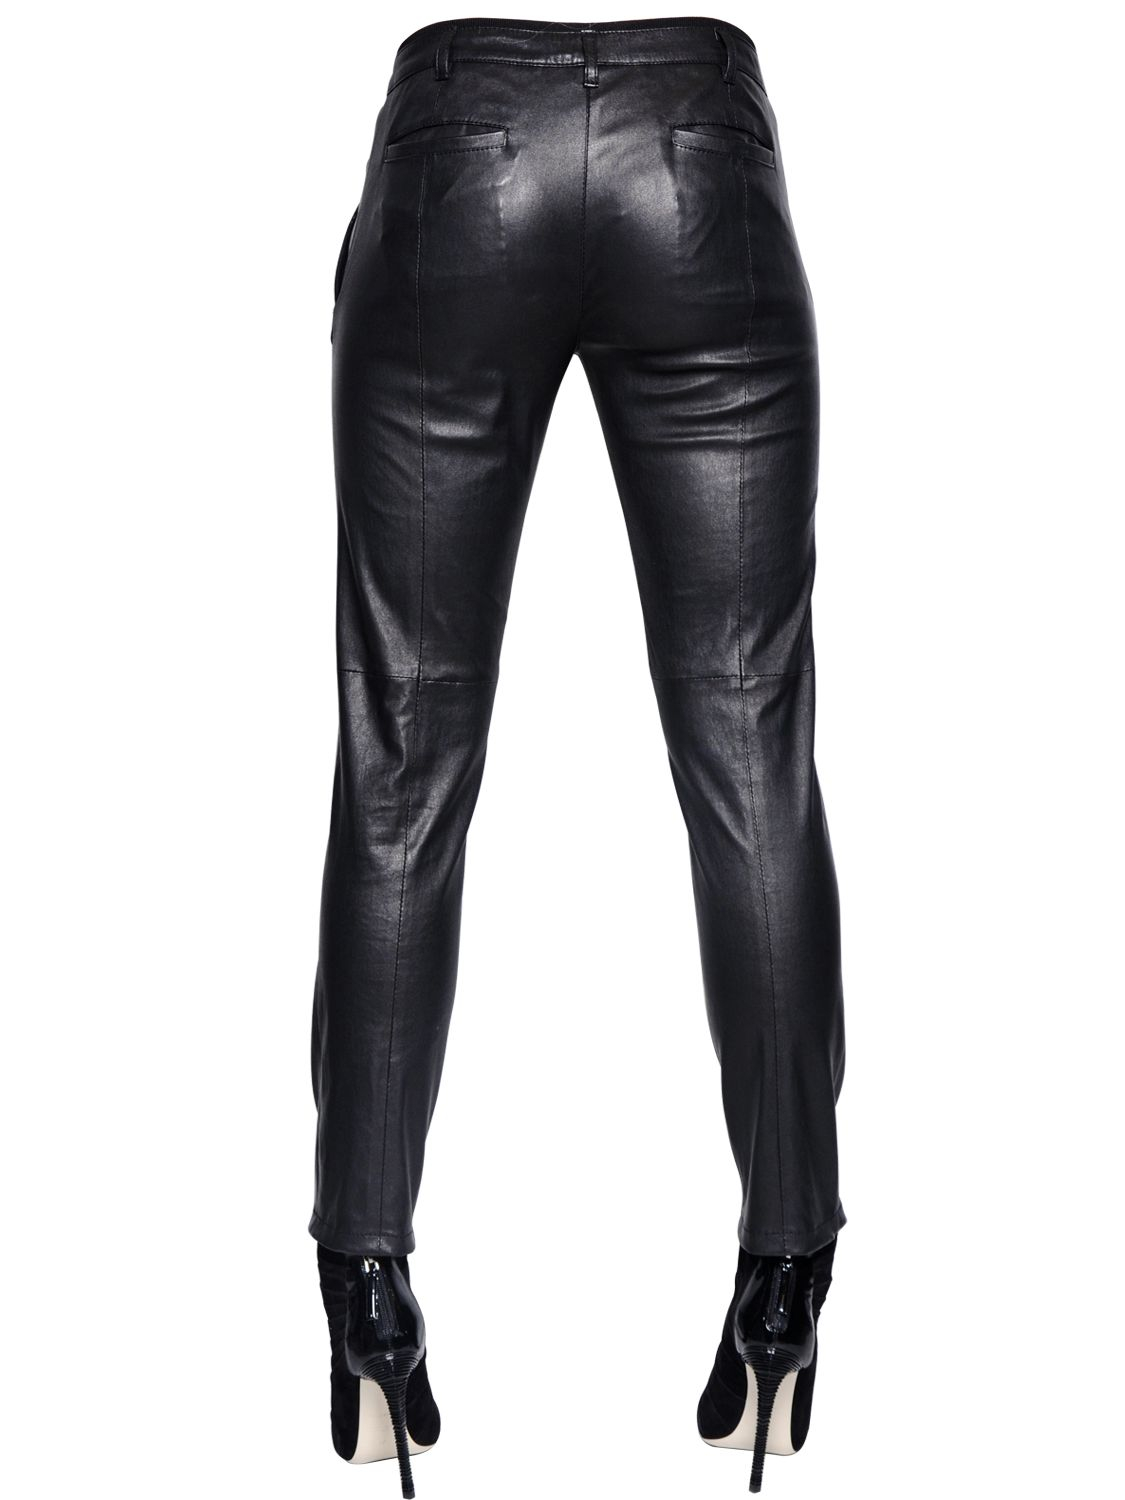 Giorgio Armani Stretch Nappa Leather Pants in Black - Lyst